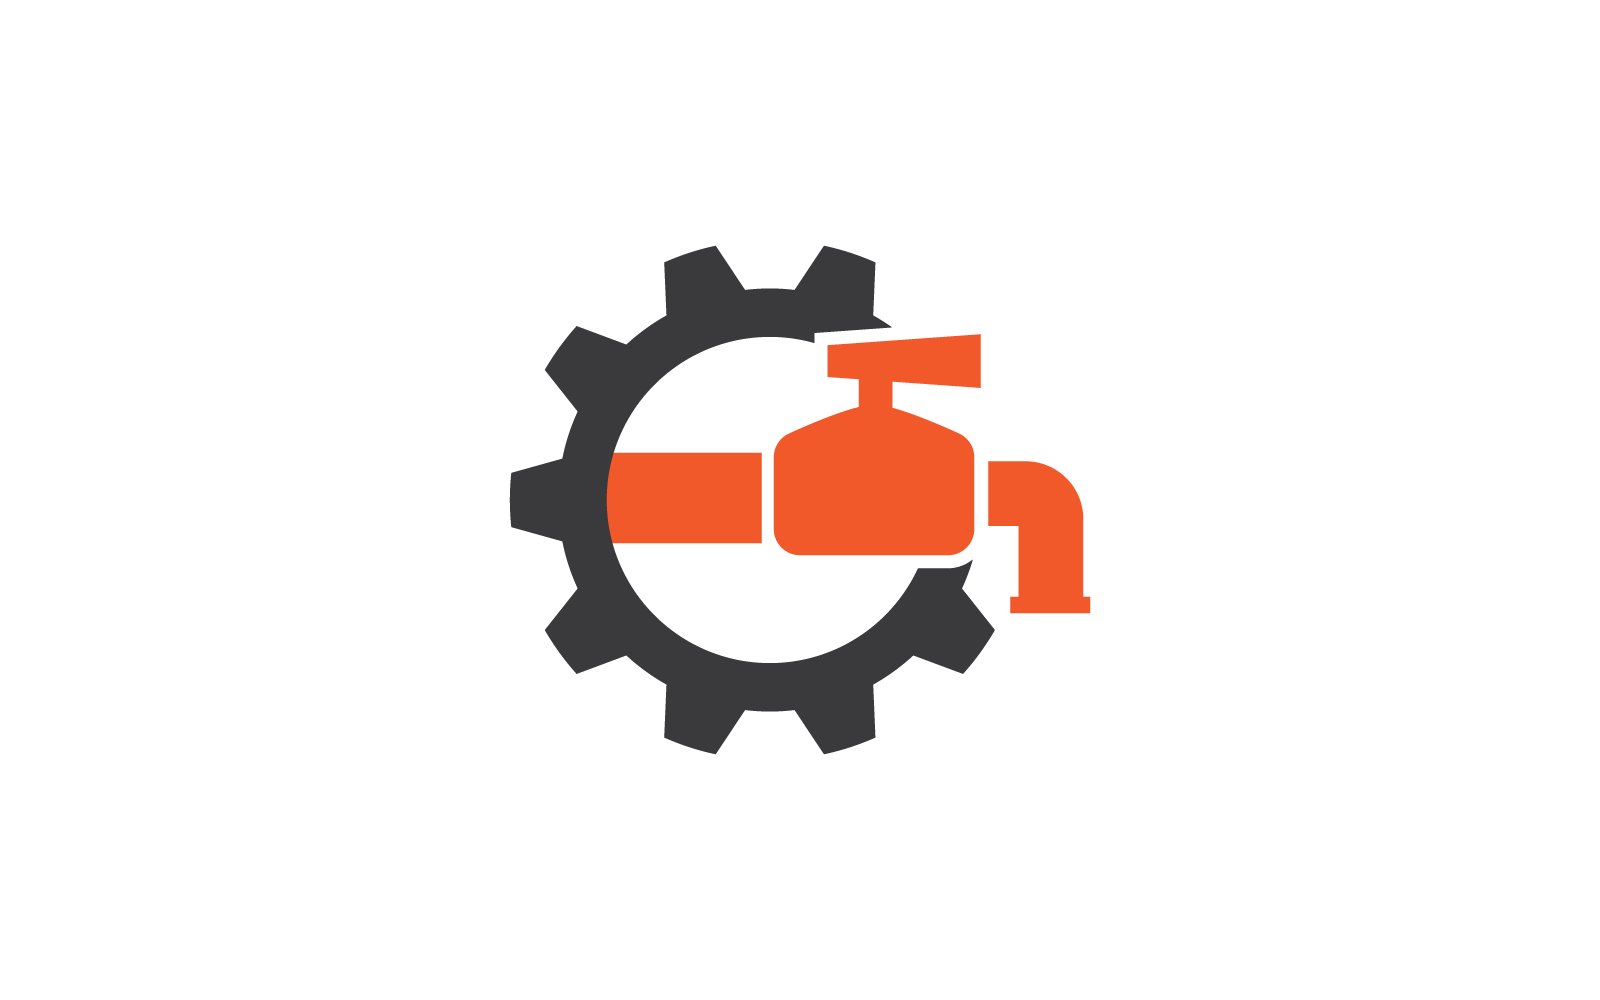 Дизайн сантехники логотип вектор плоский дизайн бизнес-шаблон